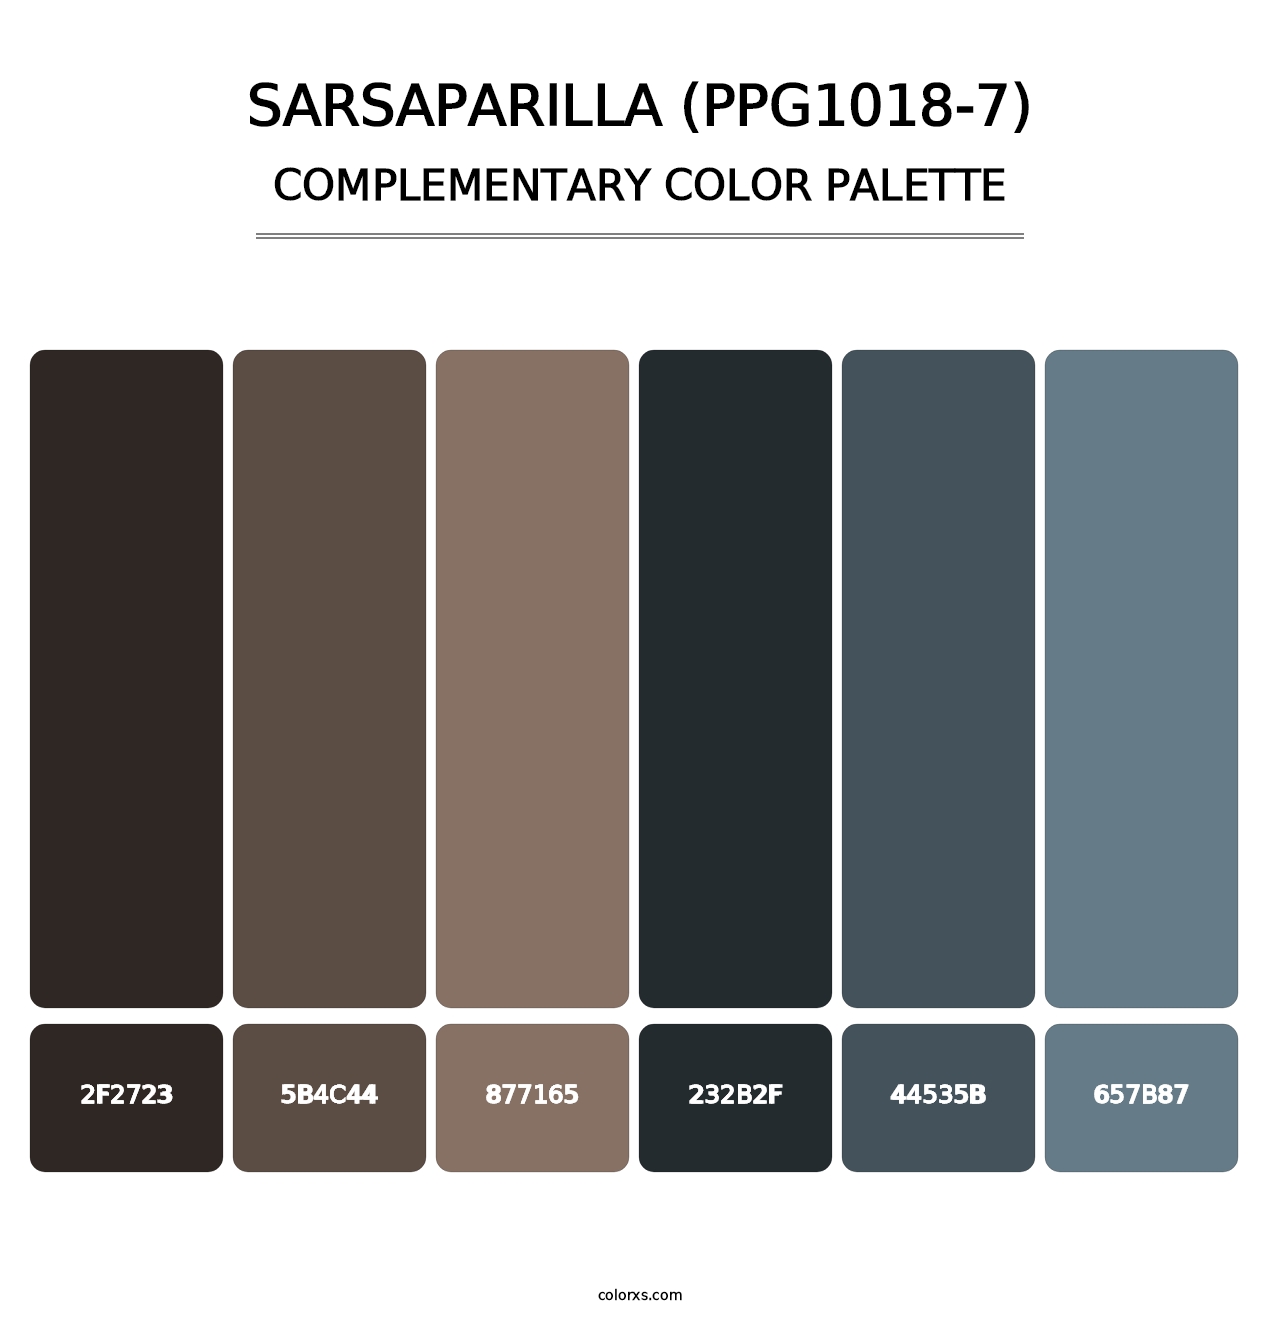 Sarsaparilla (PPG1018-7) - Complementary Color Palette